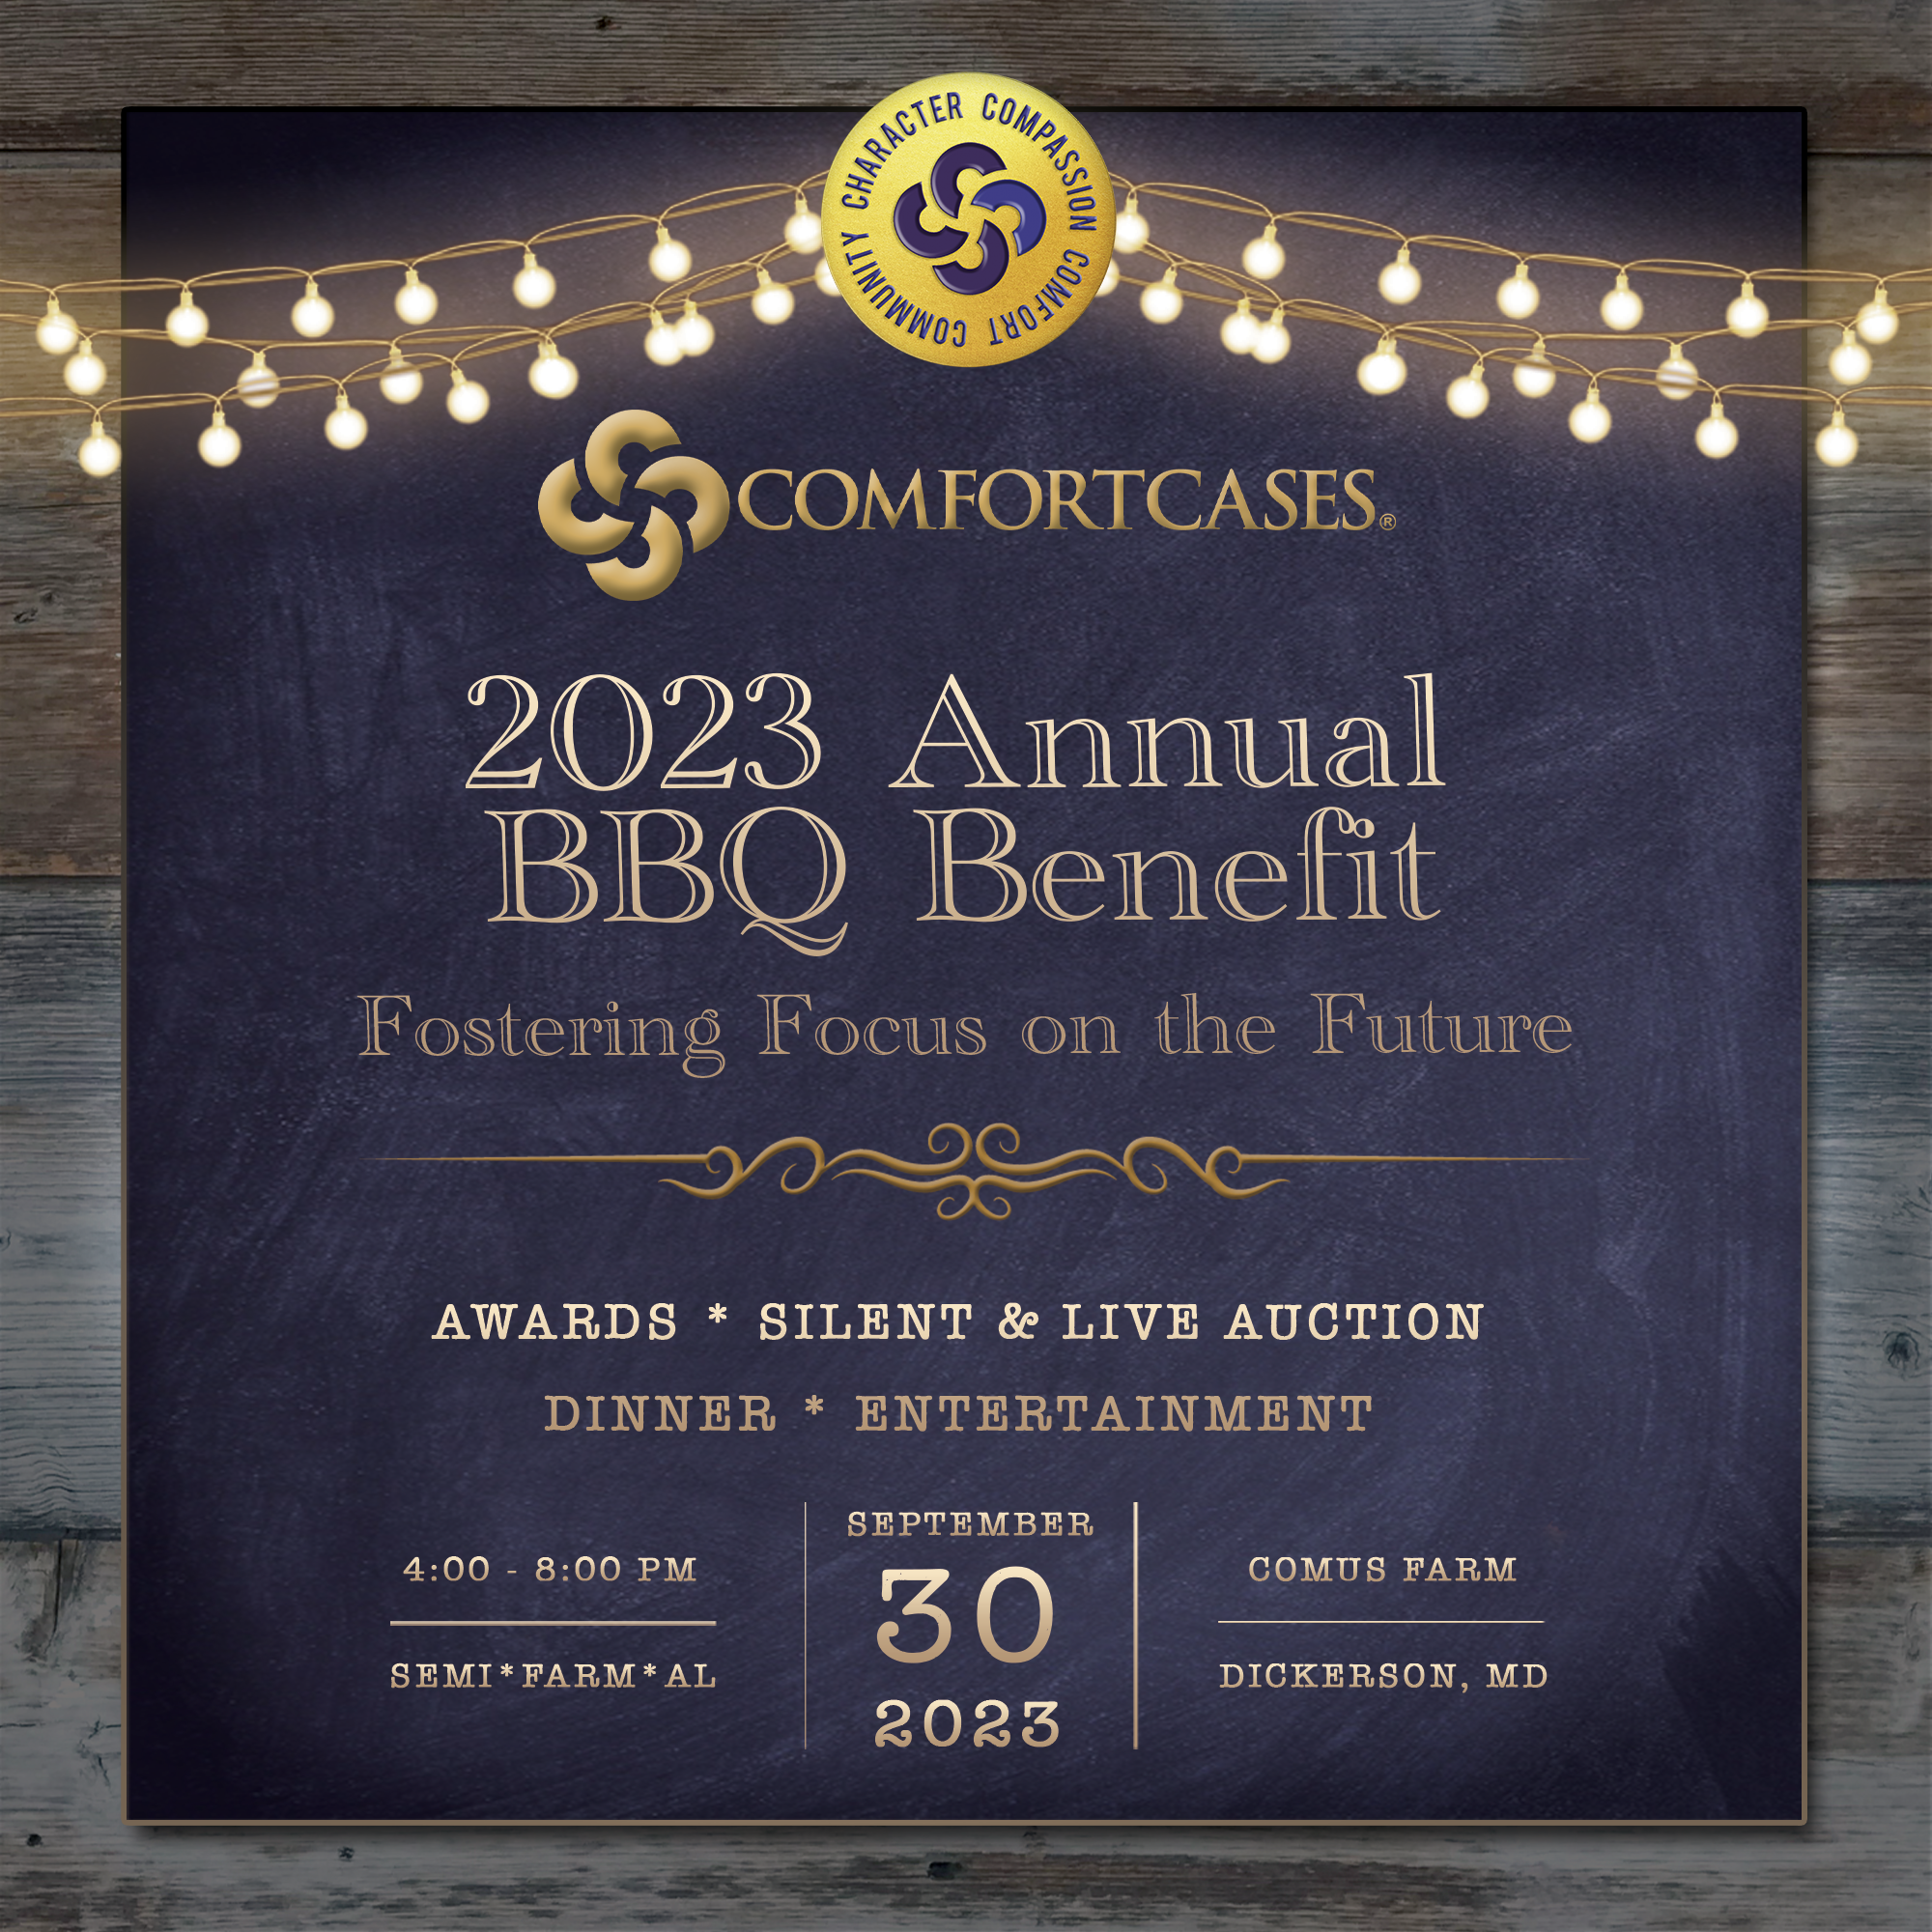 Comfort Cases 2023 Annual BBQ Benefit